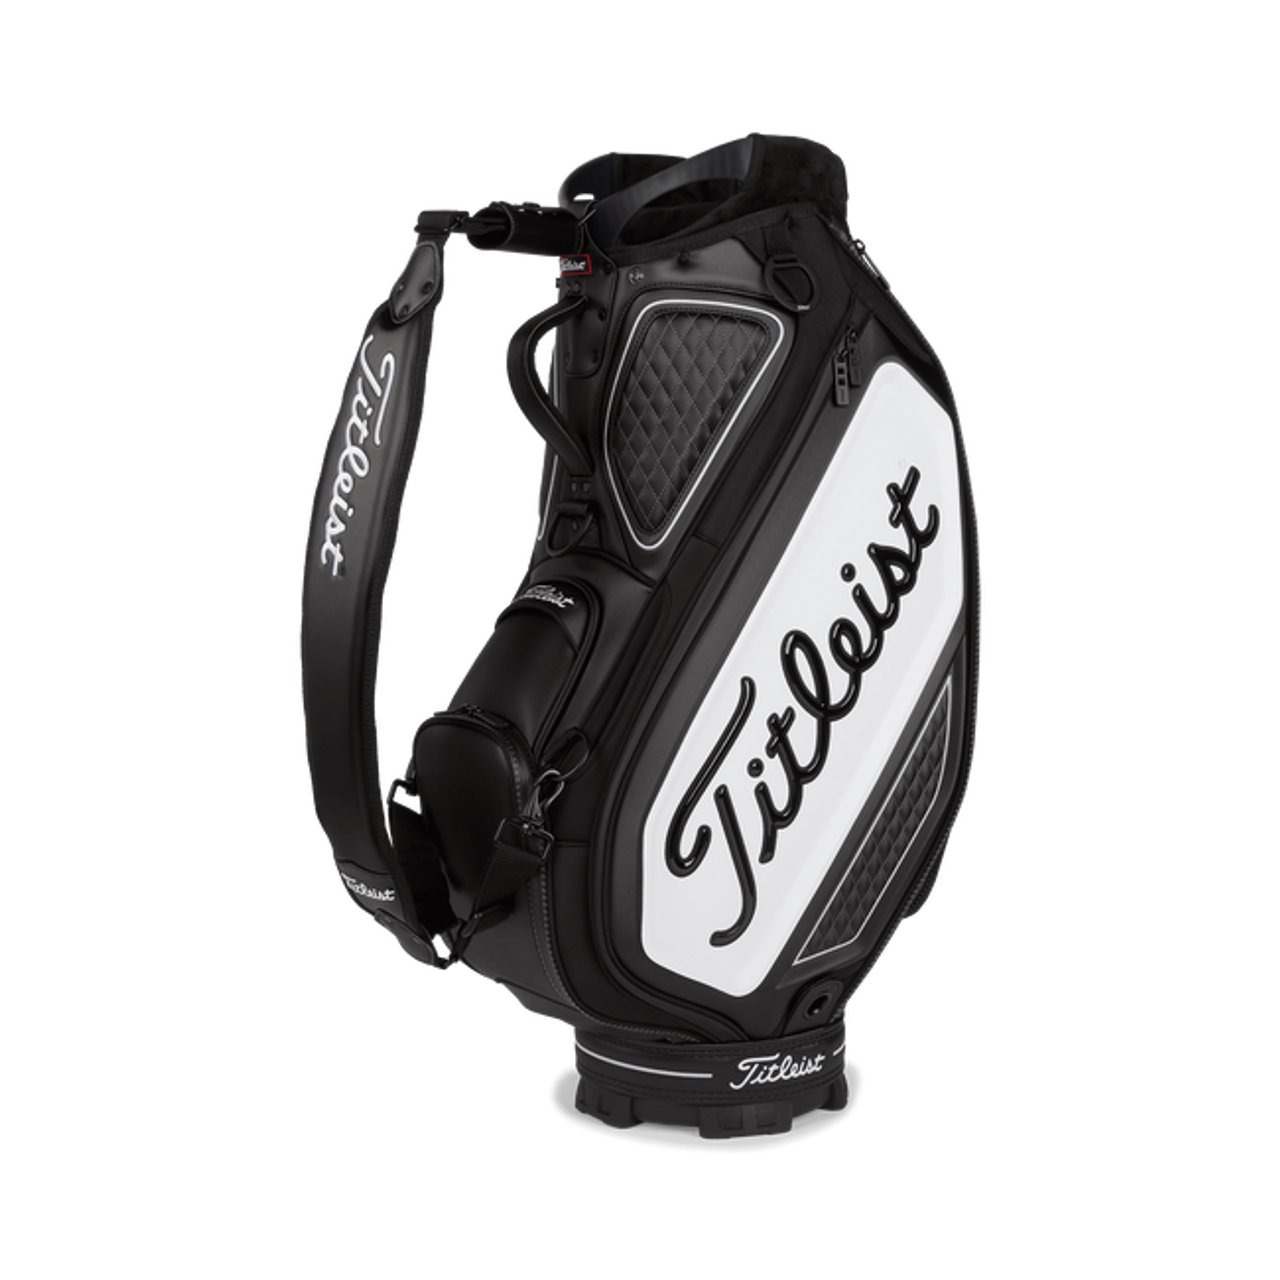 Cobra Golf Staff bag Vessel - sporting goods - by owner - sale